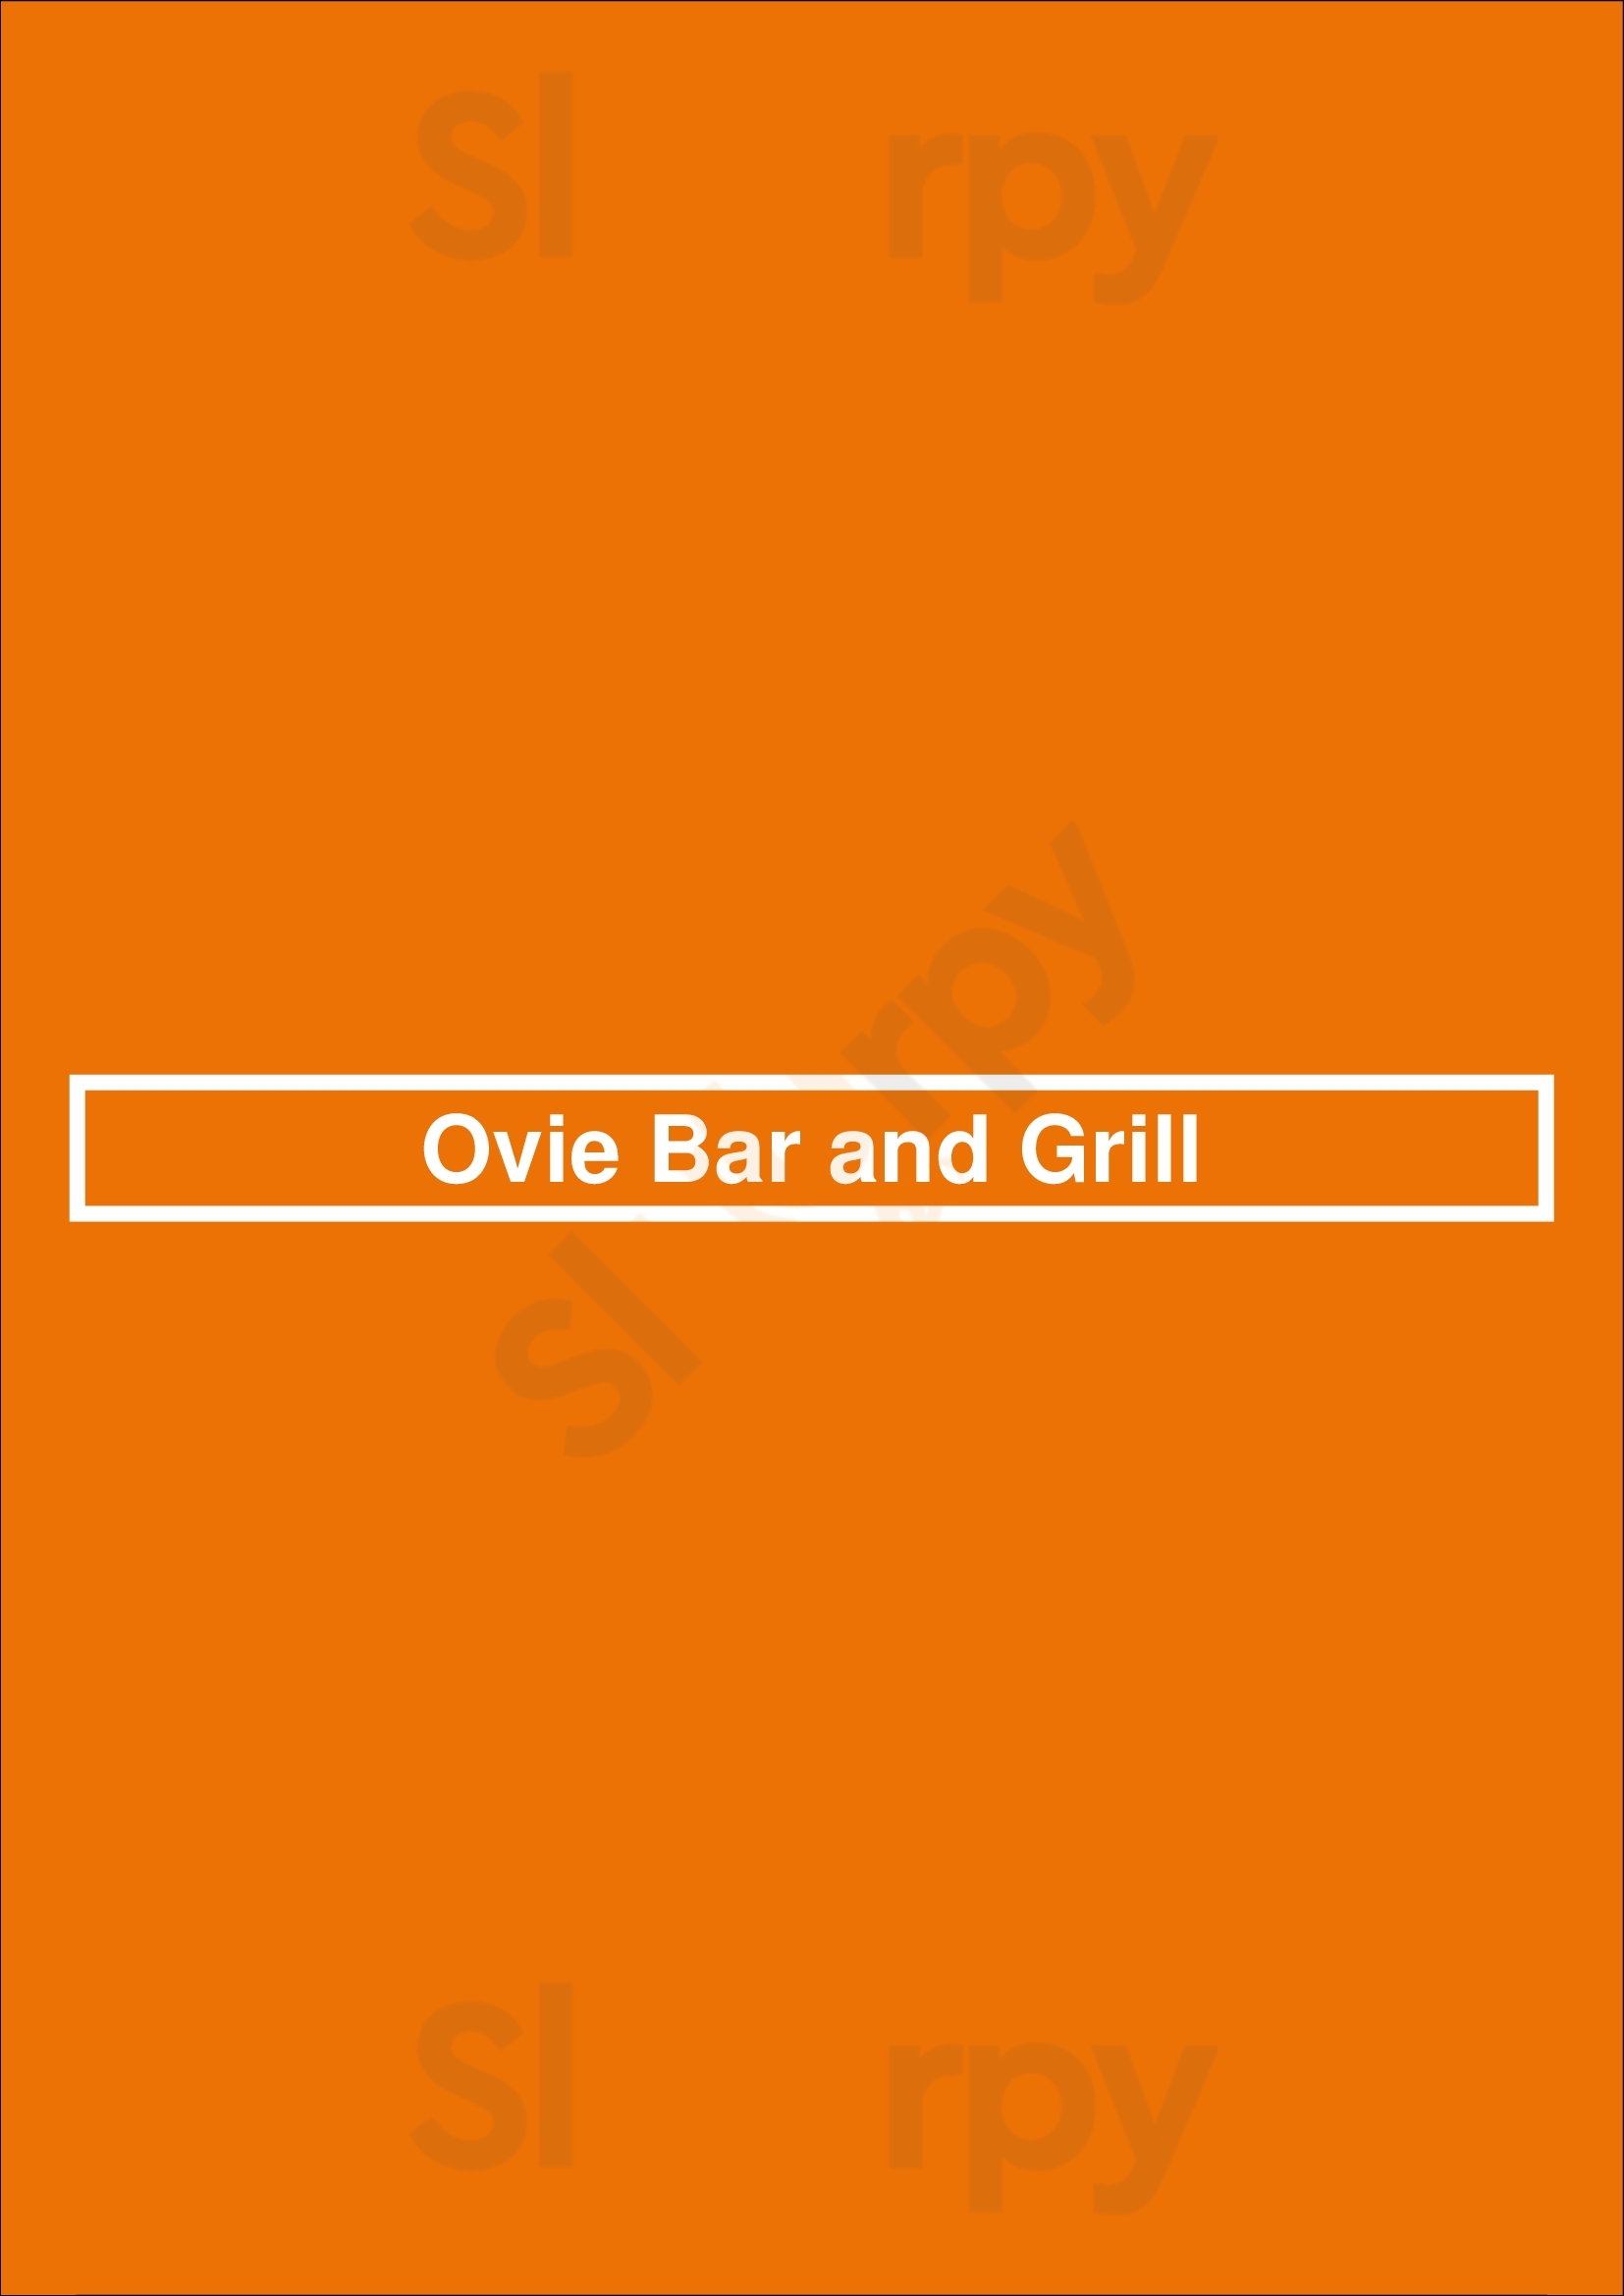 Ovie Bar & Grill Chicago Menu - 1